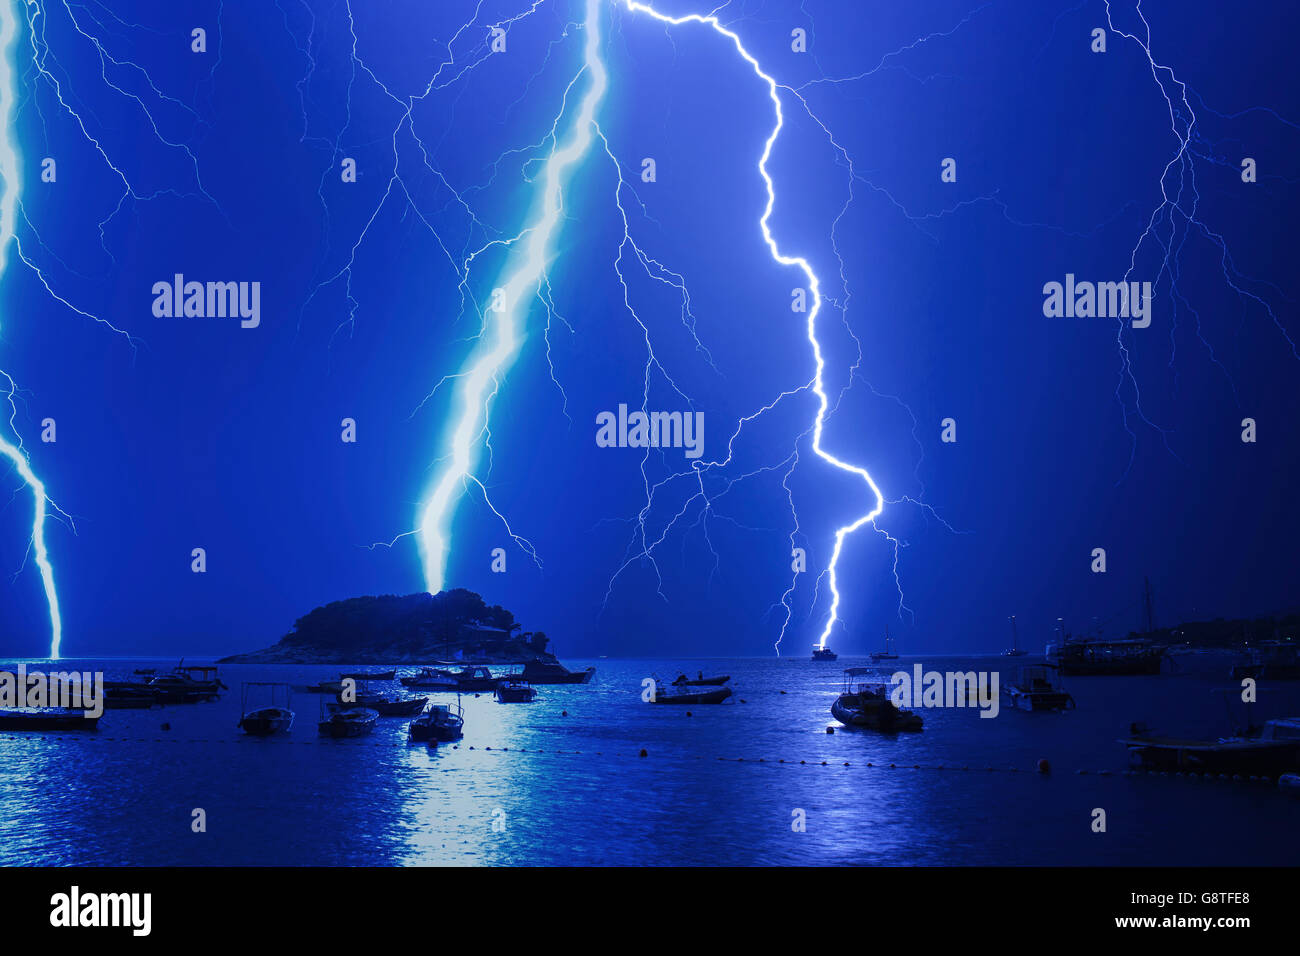 Lightnings in thunderstorm over harbor at night Stock Photo